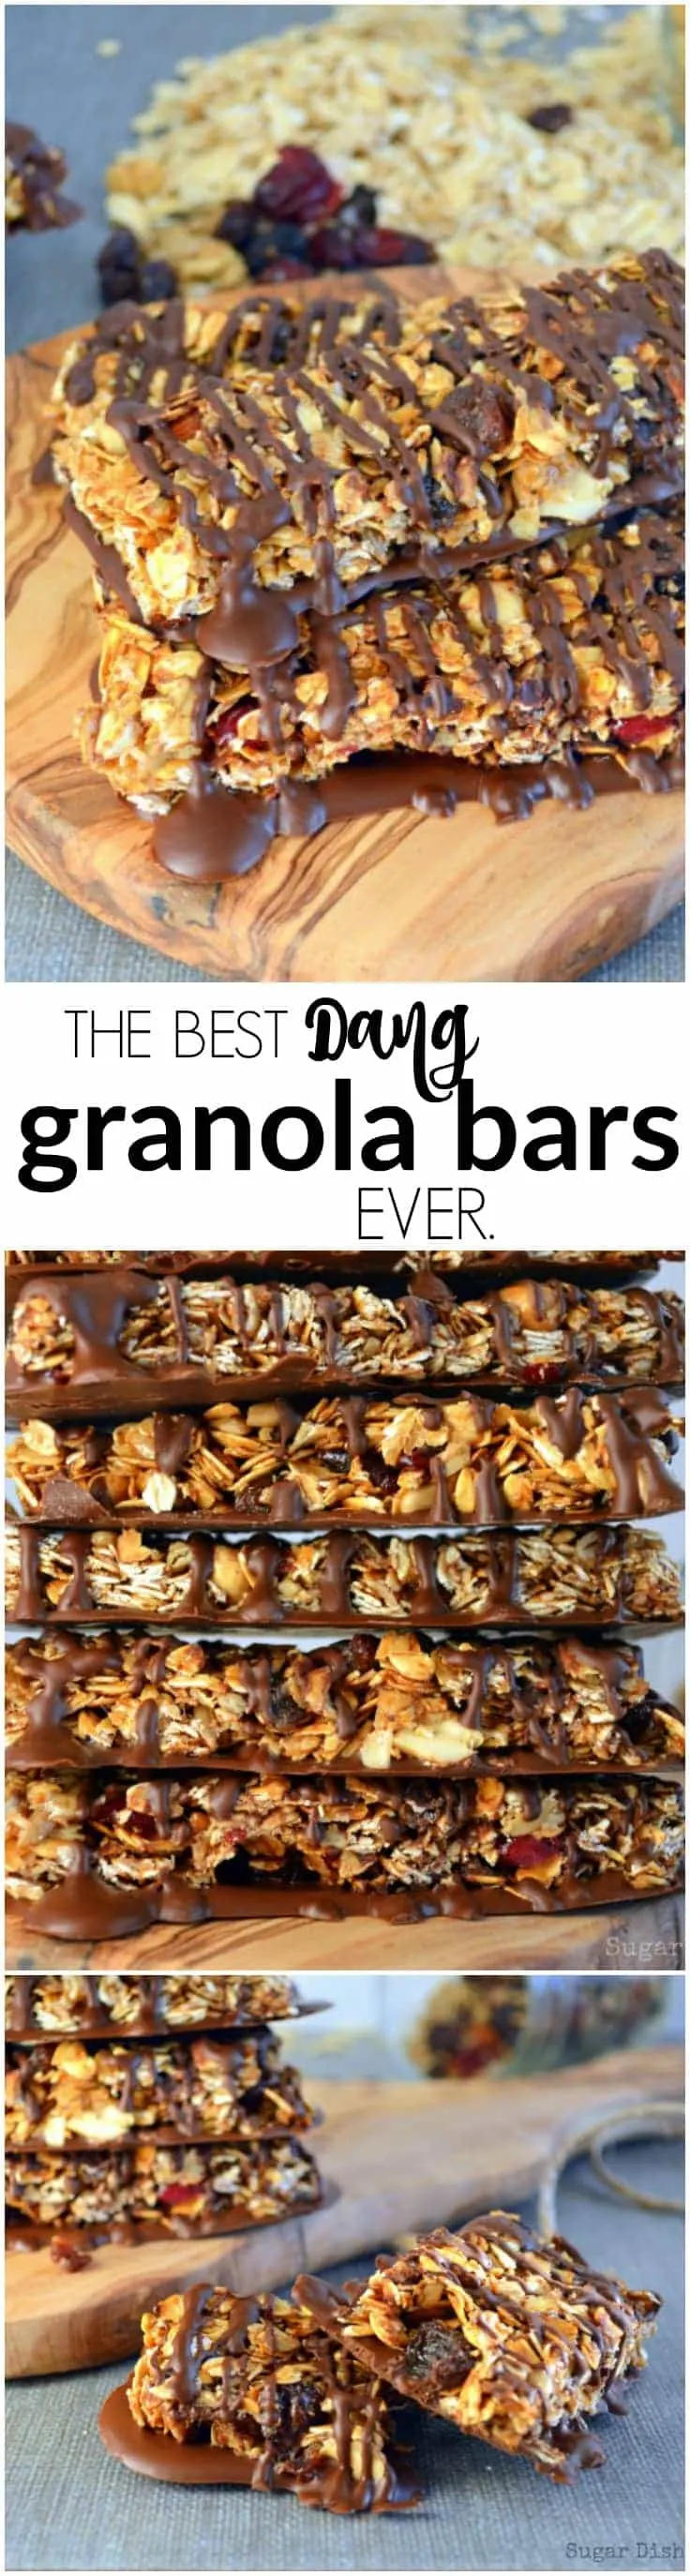 The Best Dang Granola Bars Ever